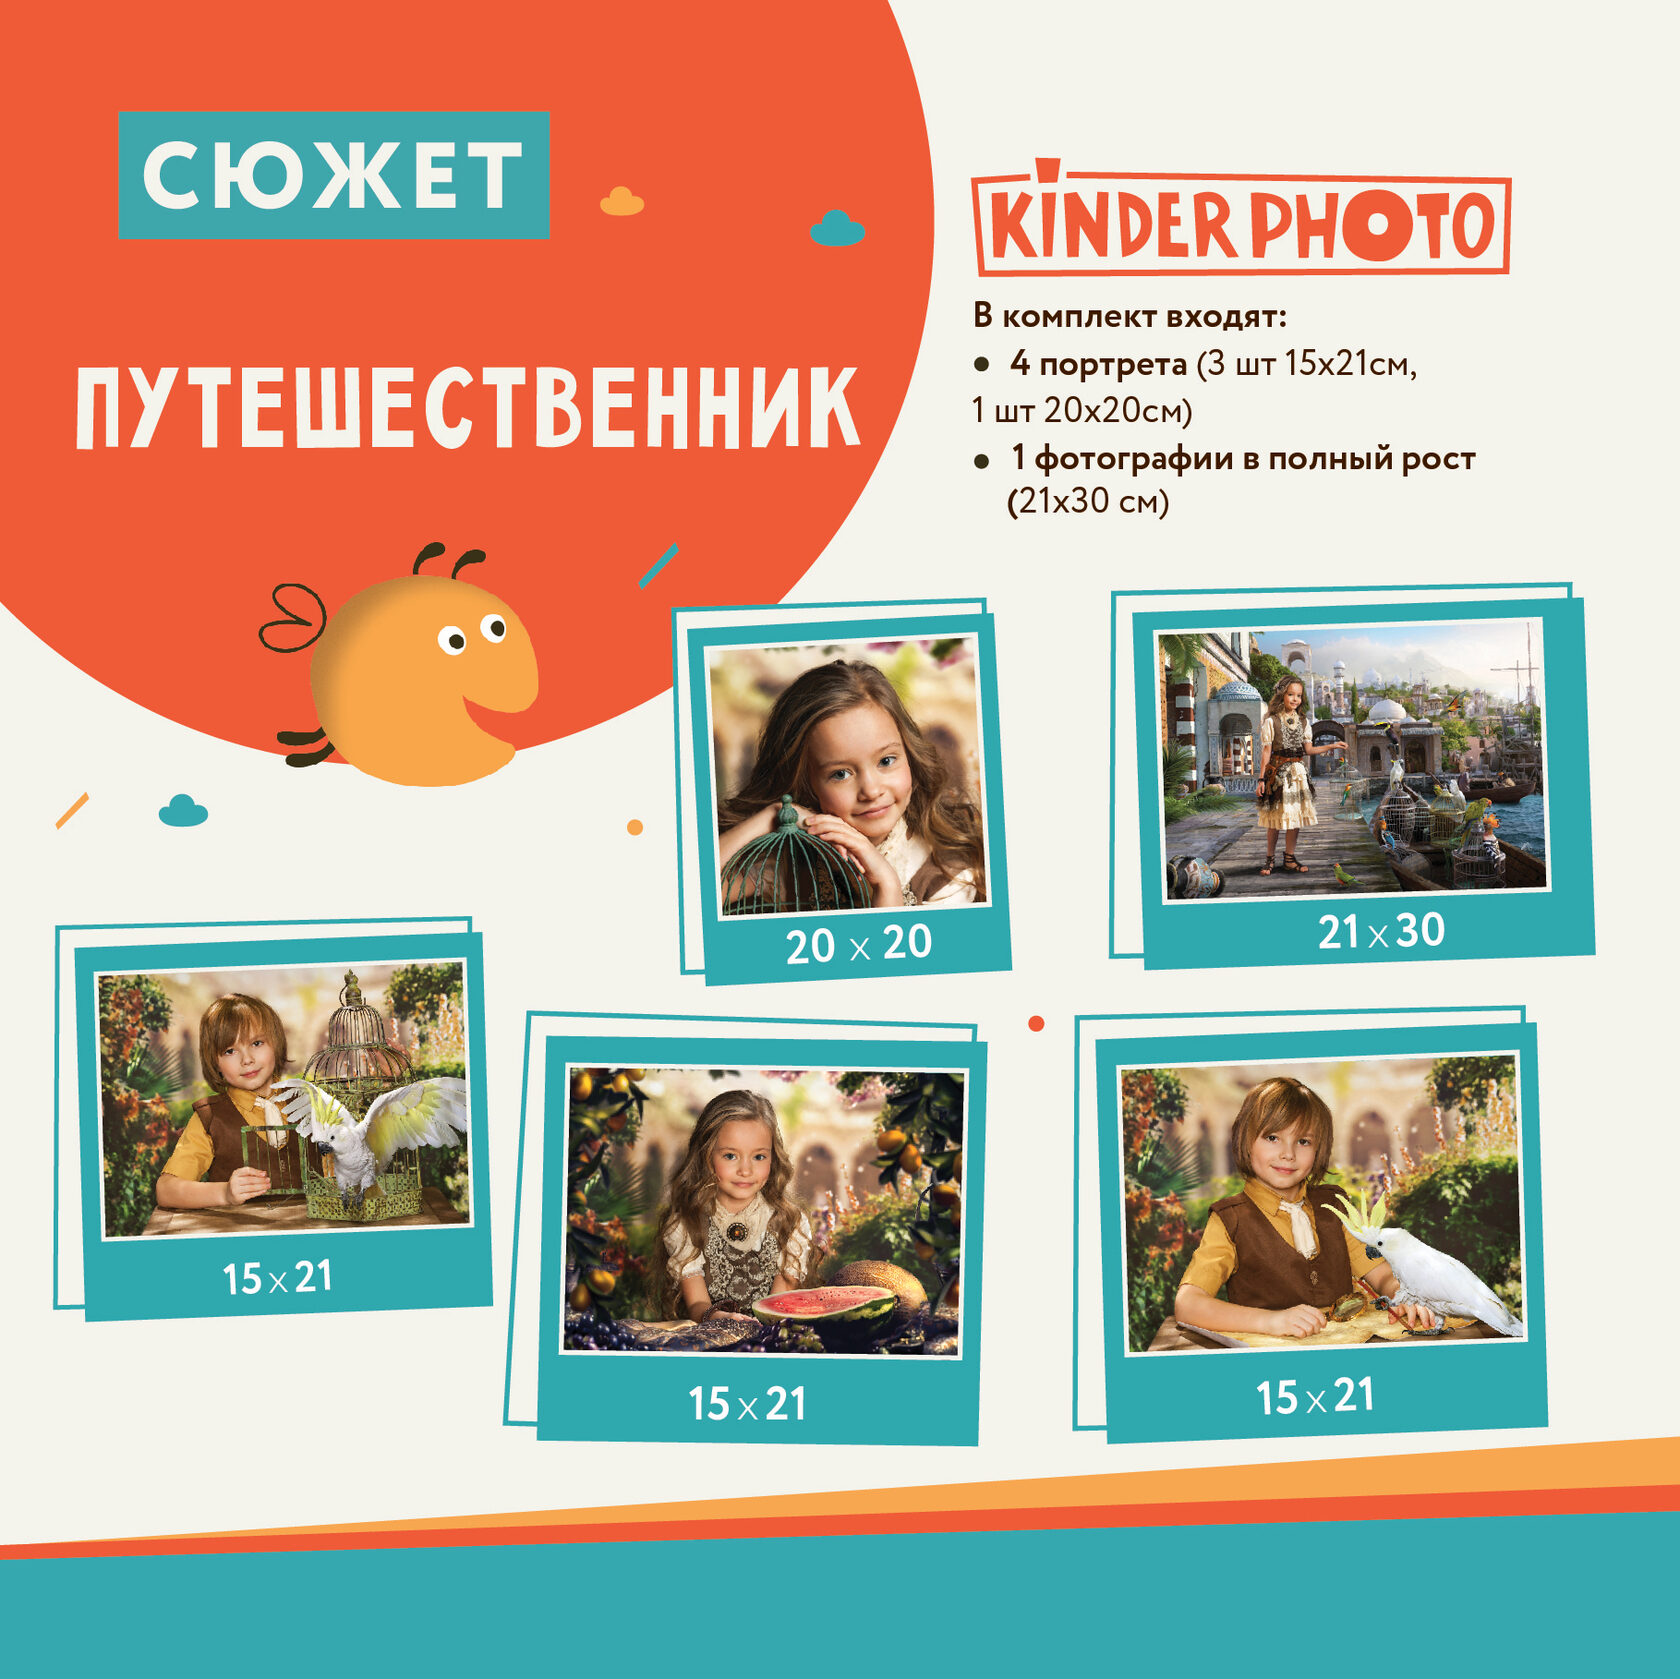 Kinderphoto ru